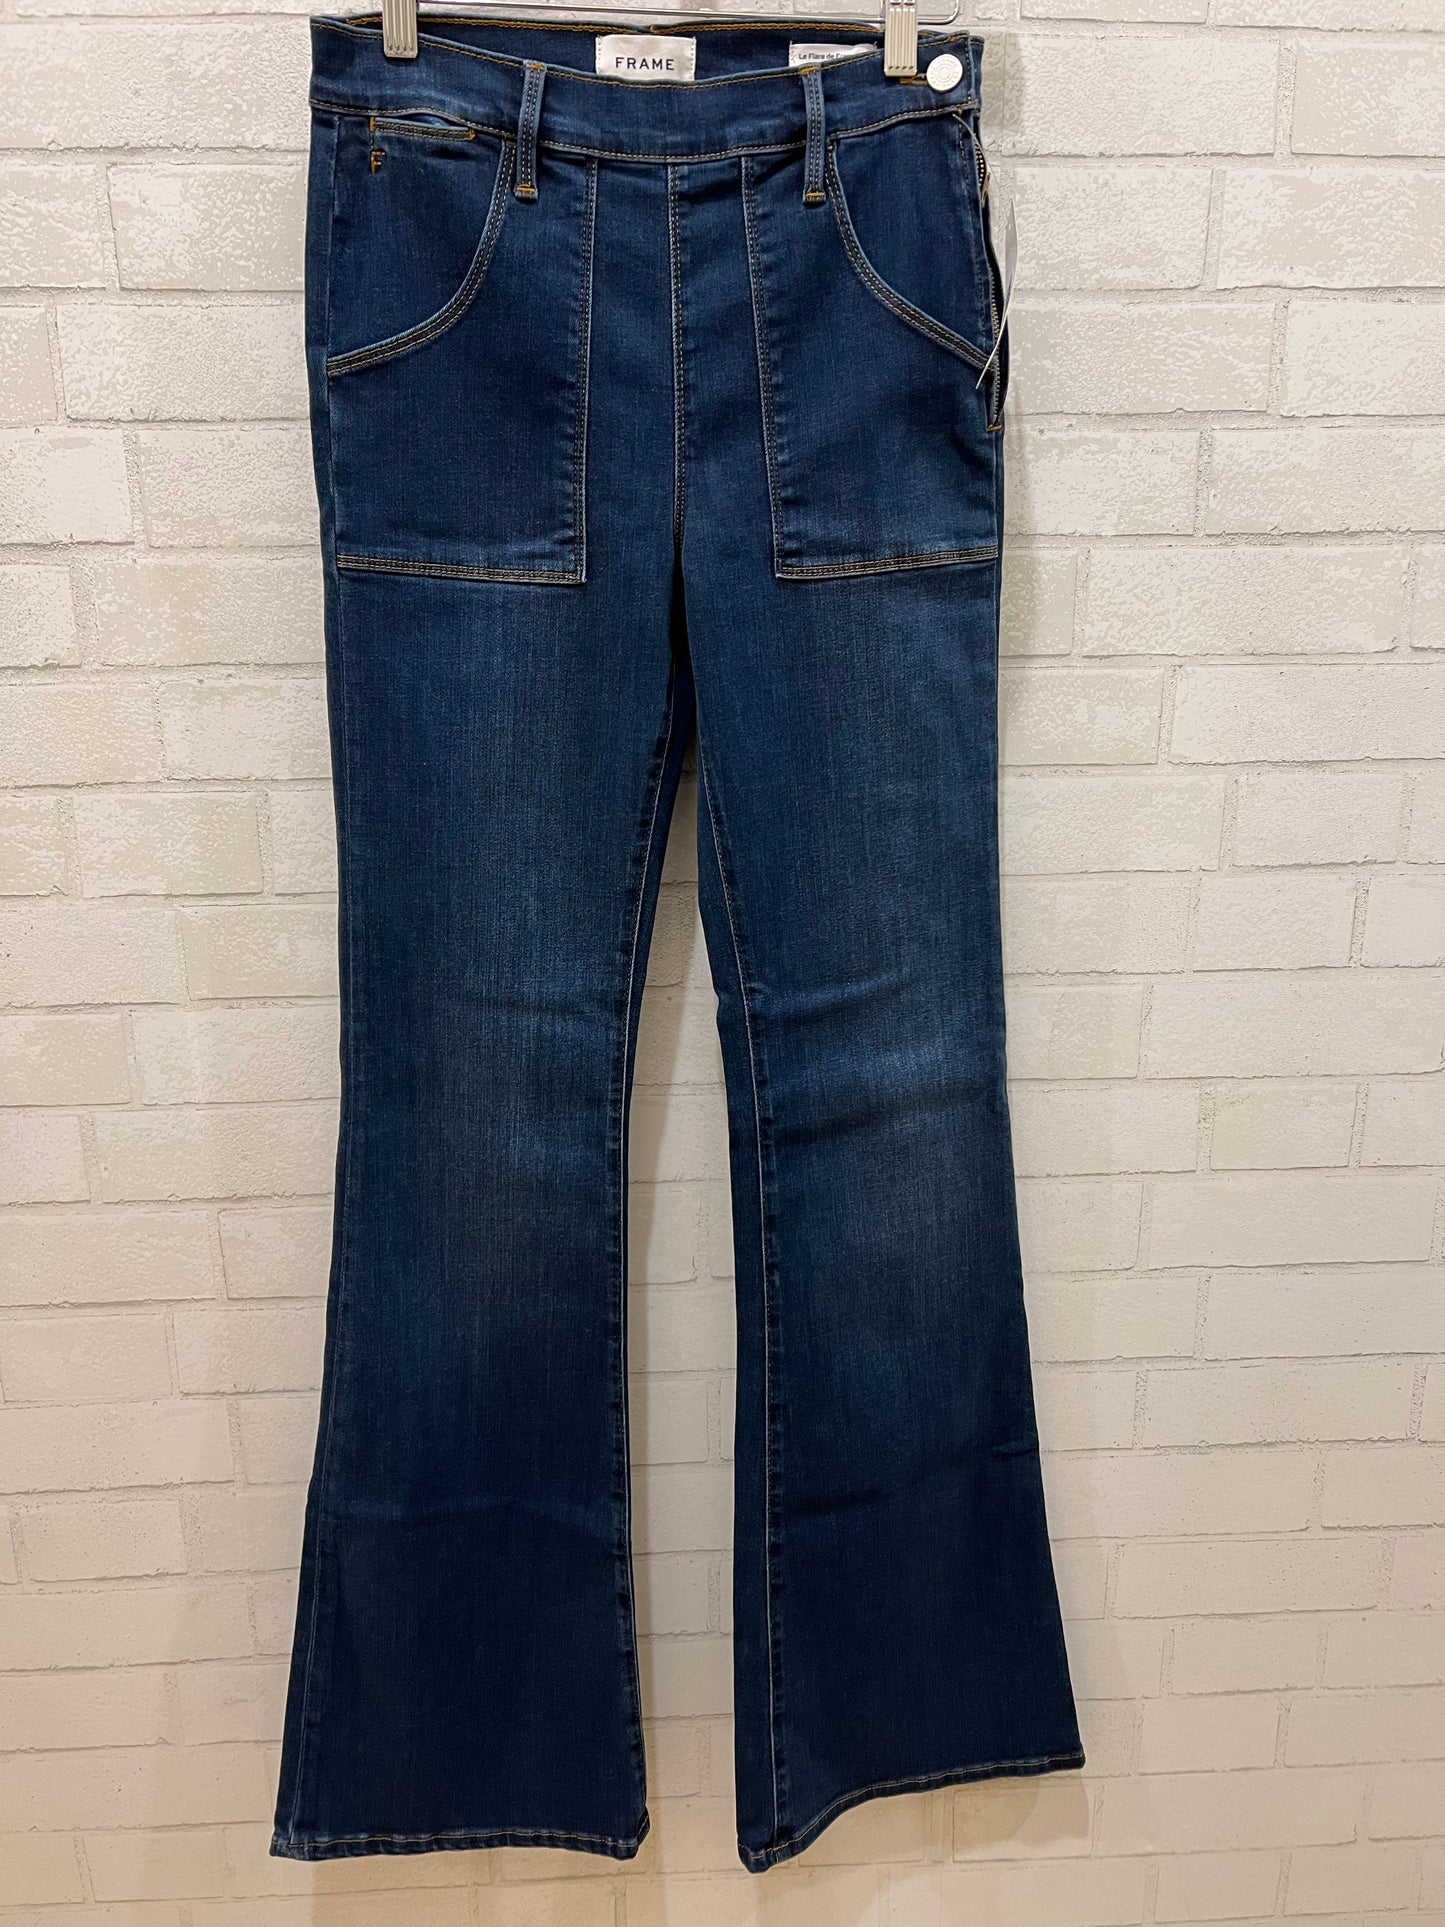 FRAME Le Flare bootleg jeans NWT/ 27-M